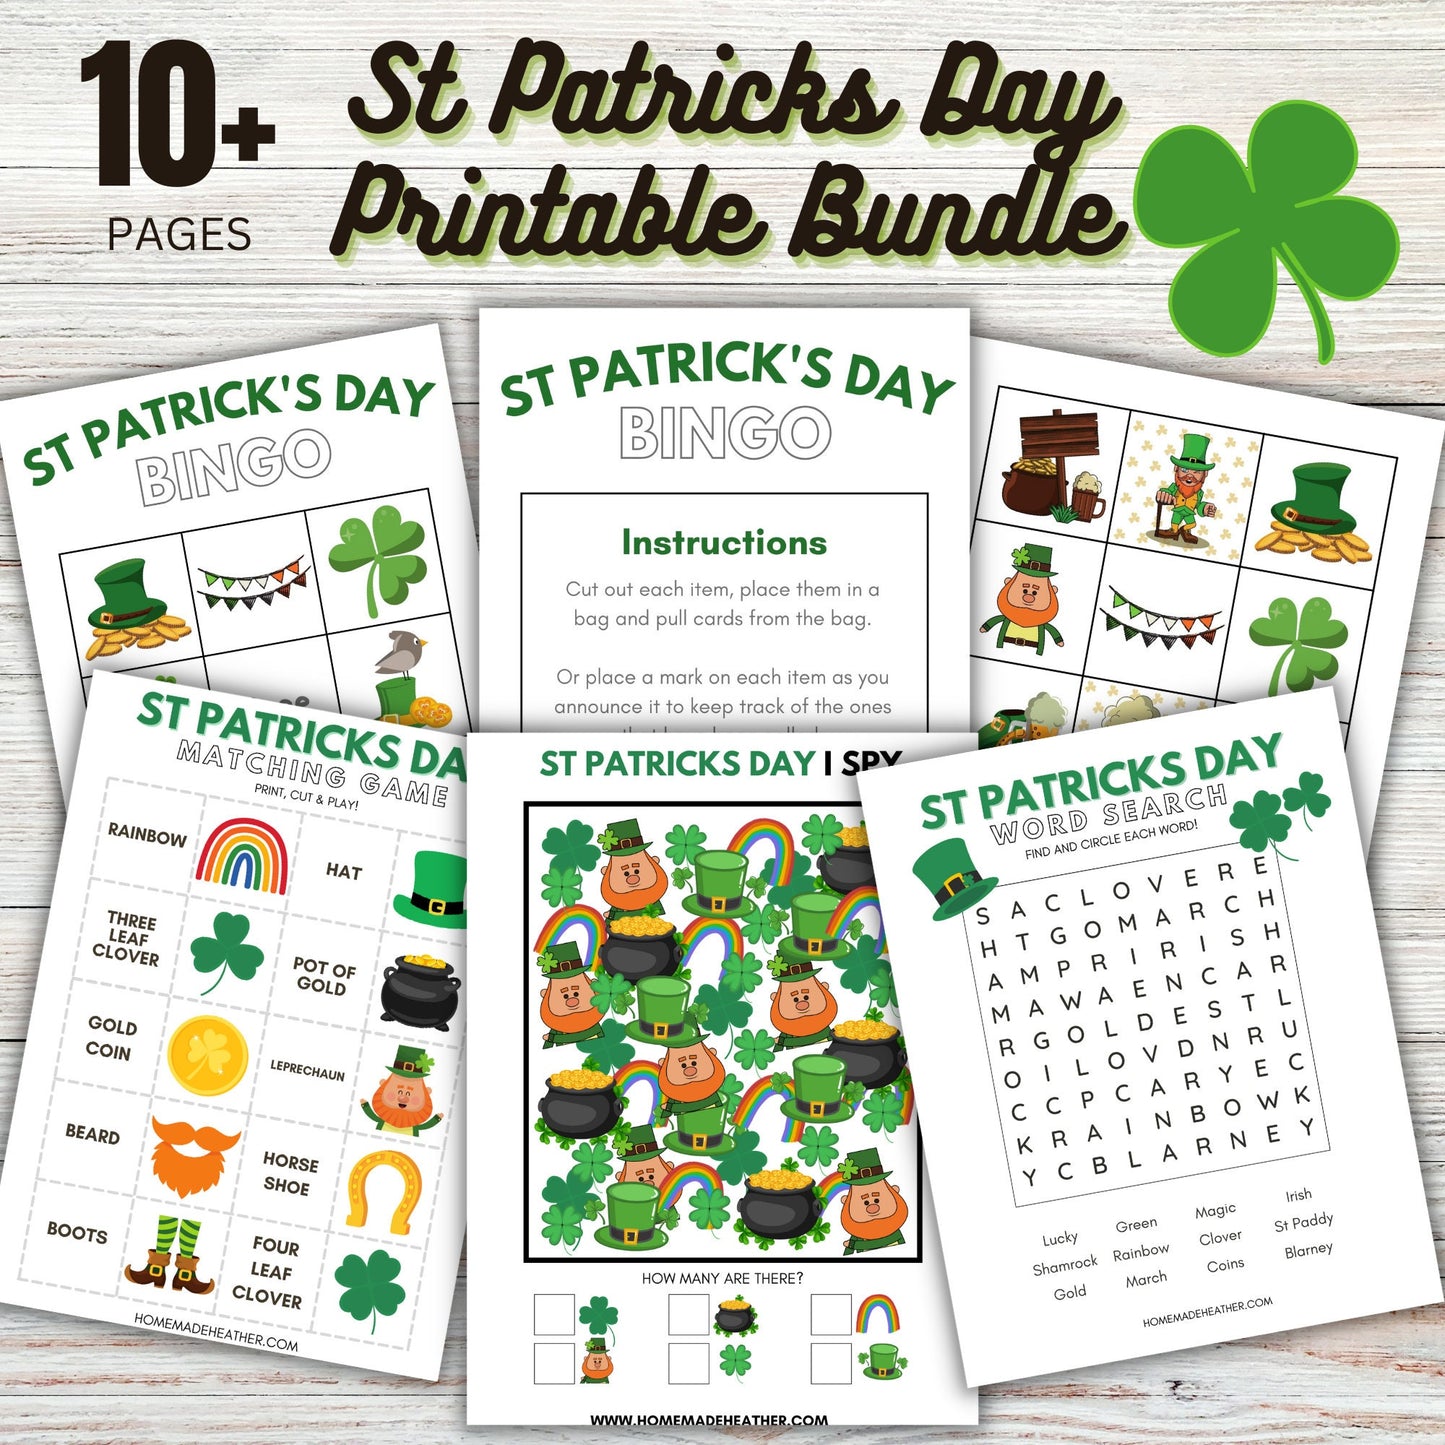 St Patricks Day Printable Activity Bundle - St Patricks Day Printable PDF - Instant Download